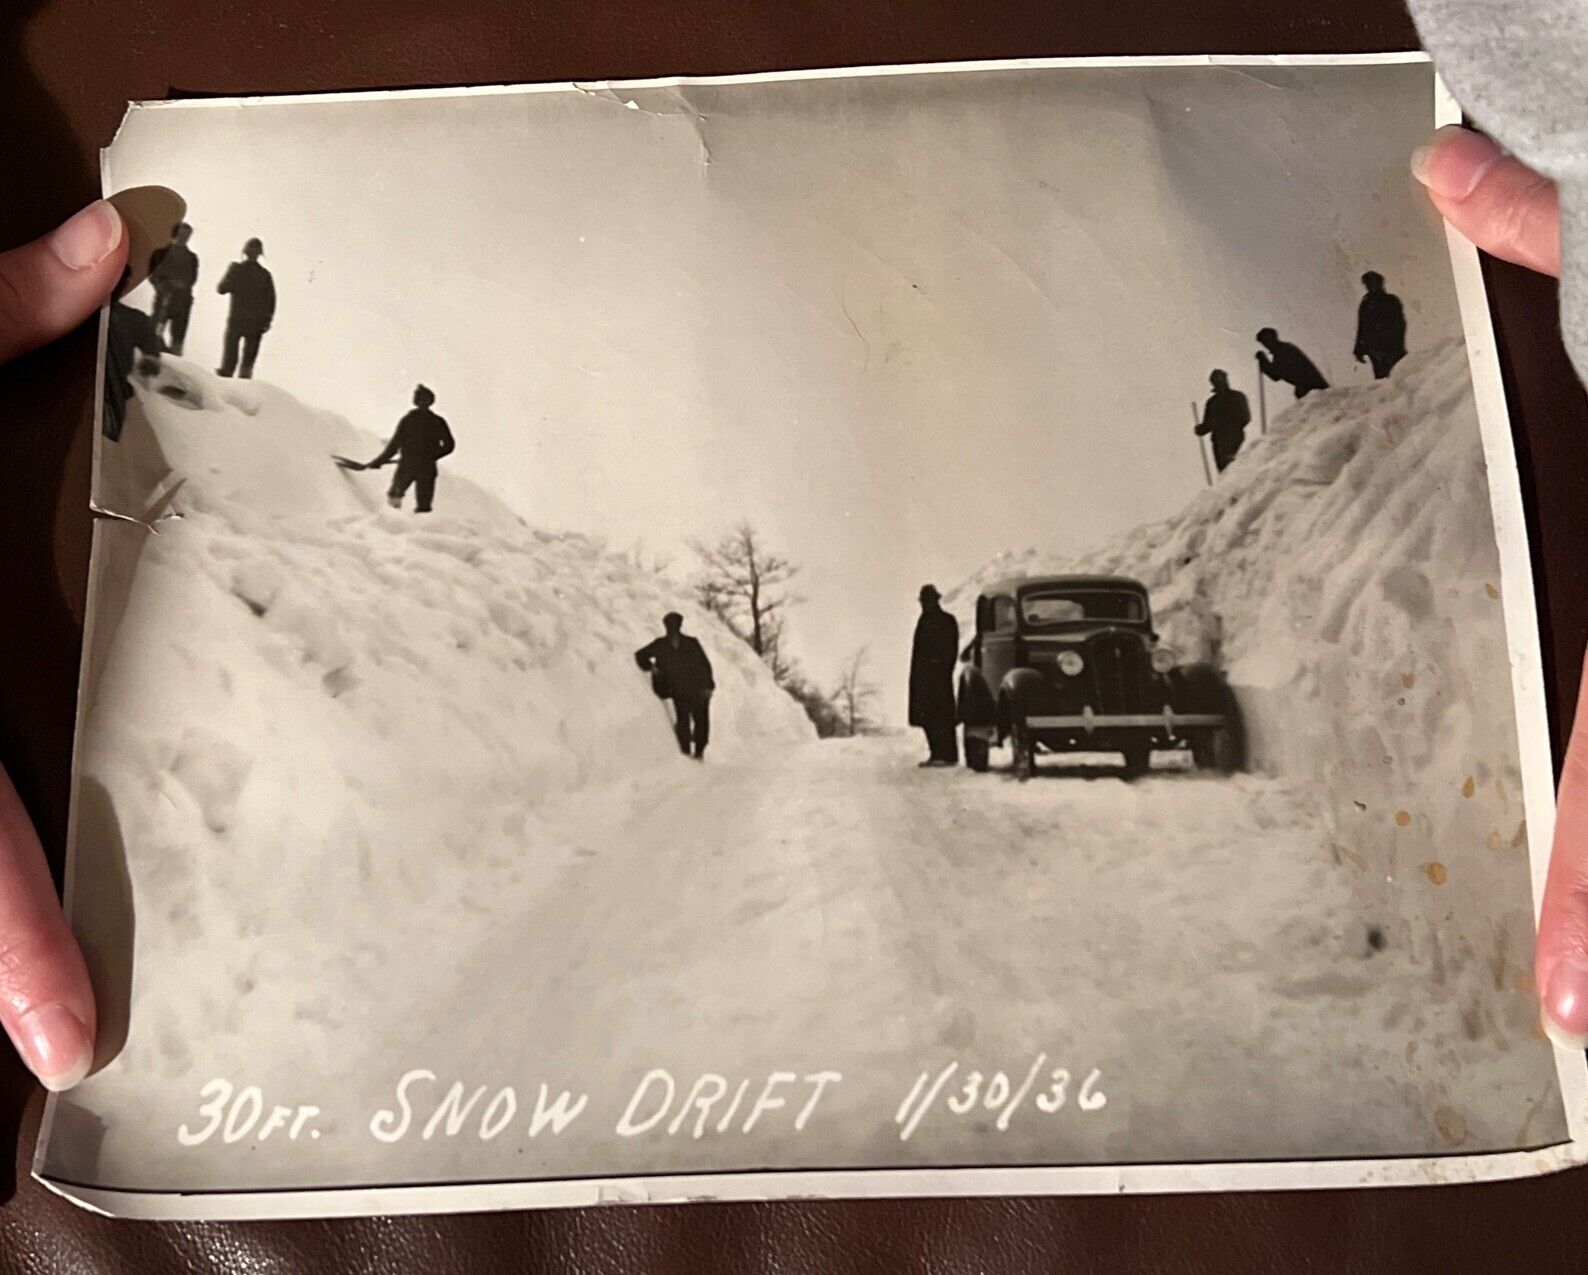 Jan 1936 Lot of 2 Photos 30’ Snow Drifts Storm Carrolltown PA 8”x10” Sharbaugh’s